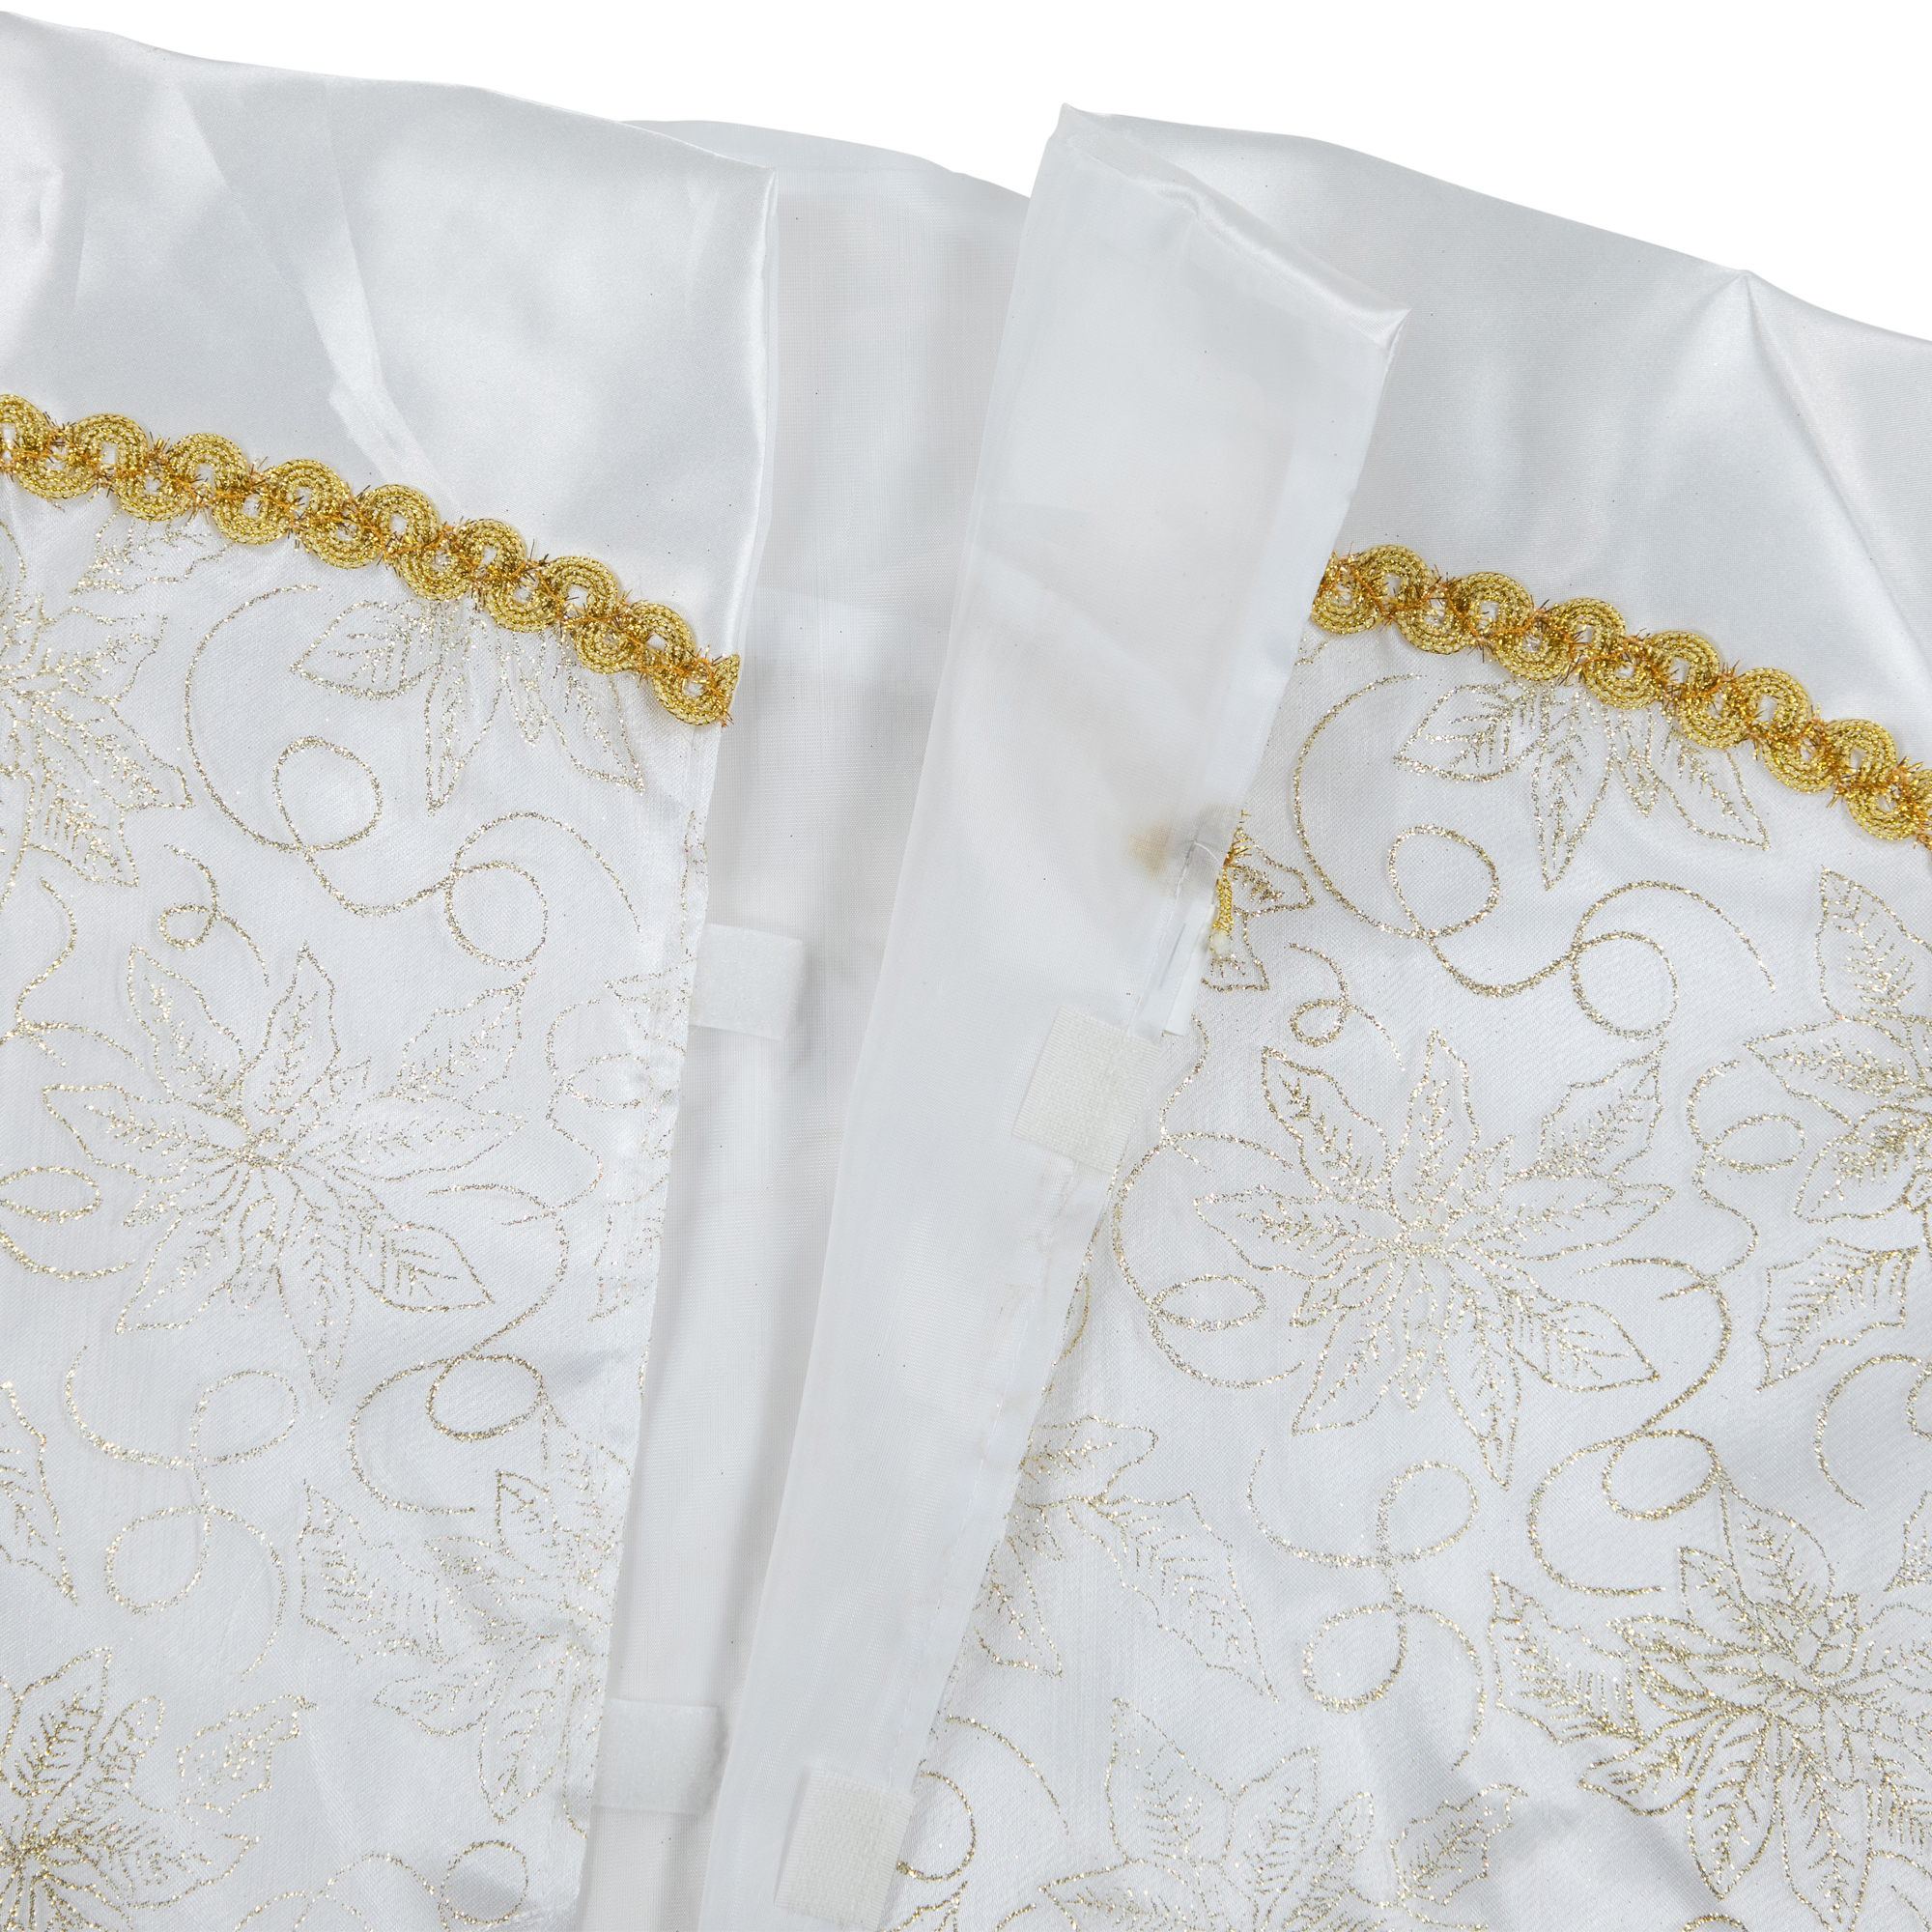 Northlight 48" White and Gold Glitter Poinsettia Scalloped Christmas Tree Skirt